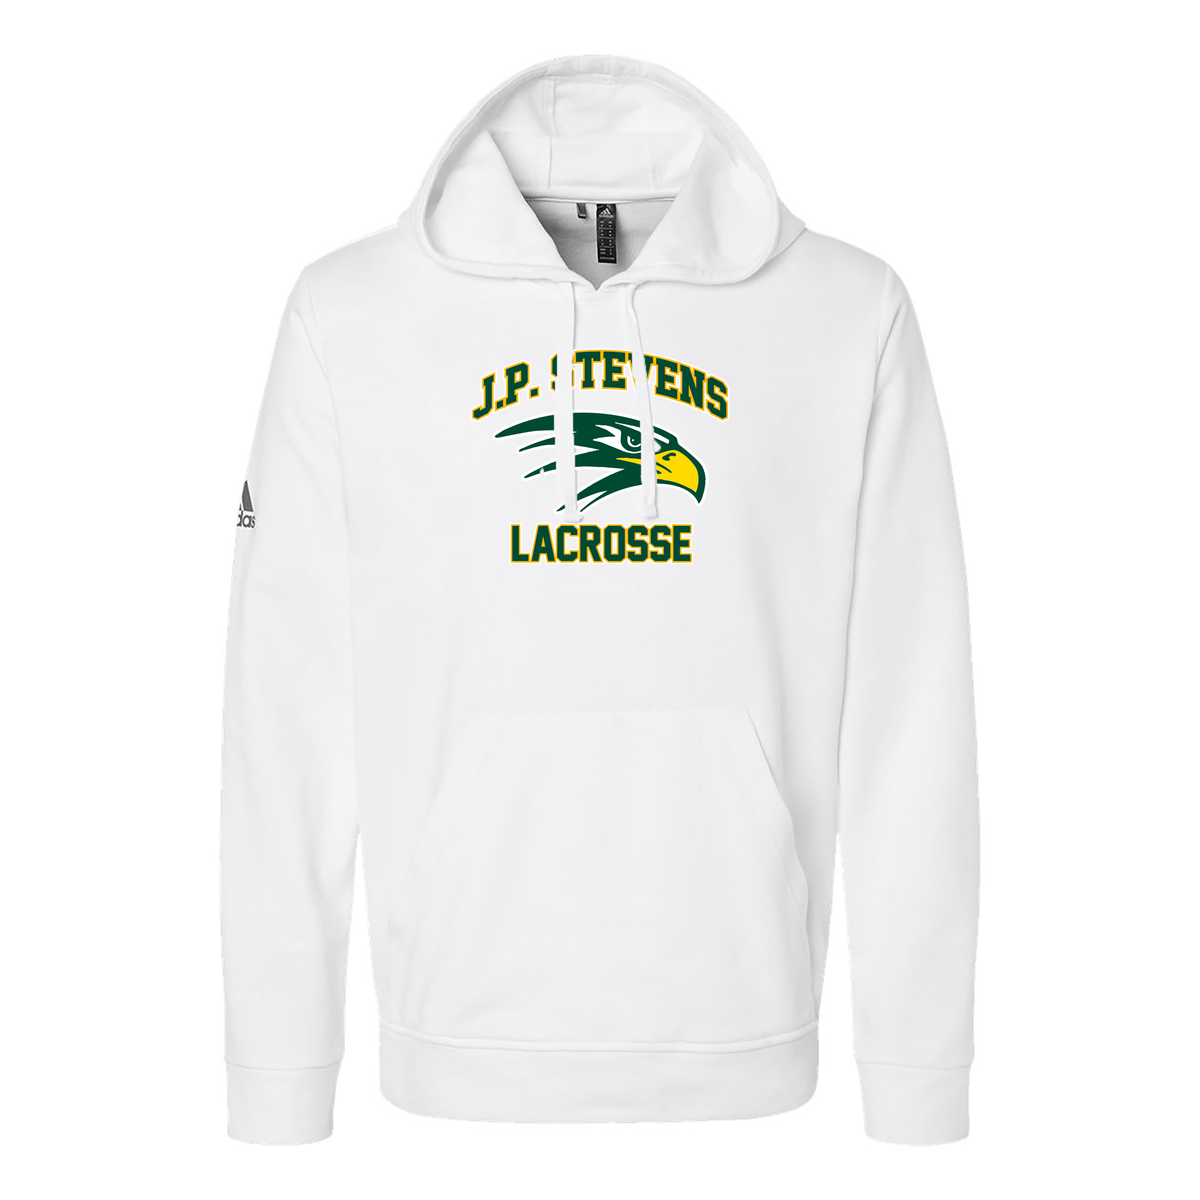 J.P. Stevens Lacrosse Adidas Fleece Hooded Sweatshirt